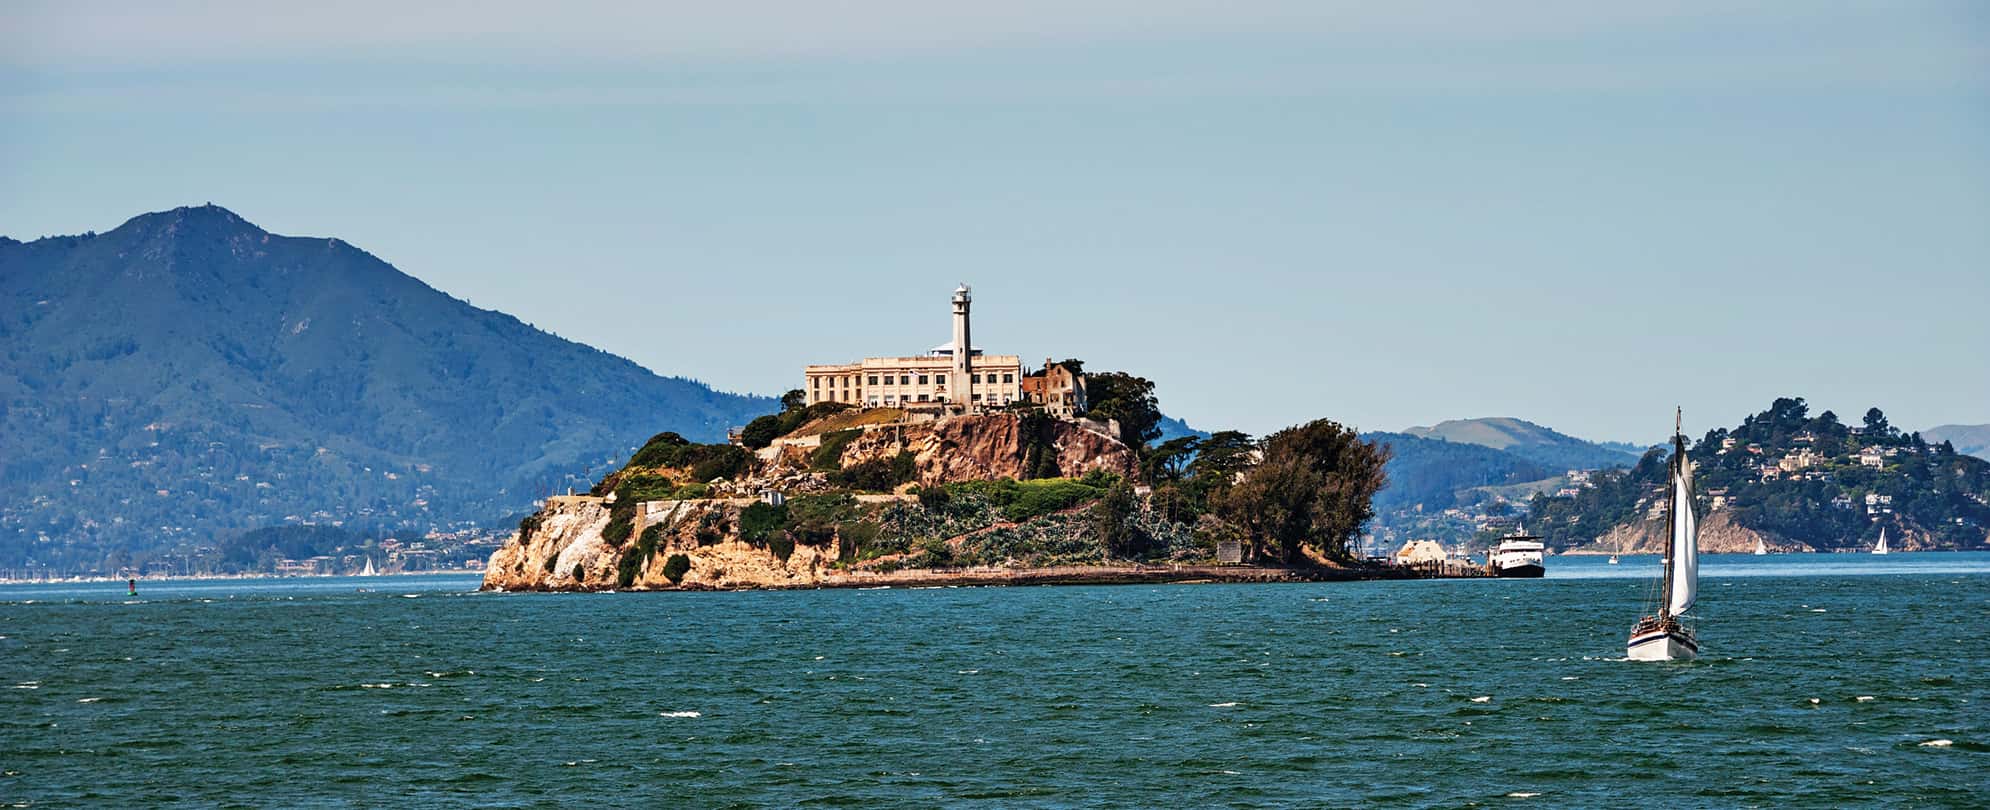 Alcatraz Island surrounded by water off the coast of San Francisco, California.